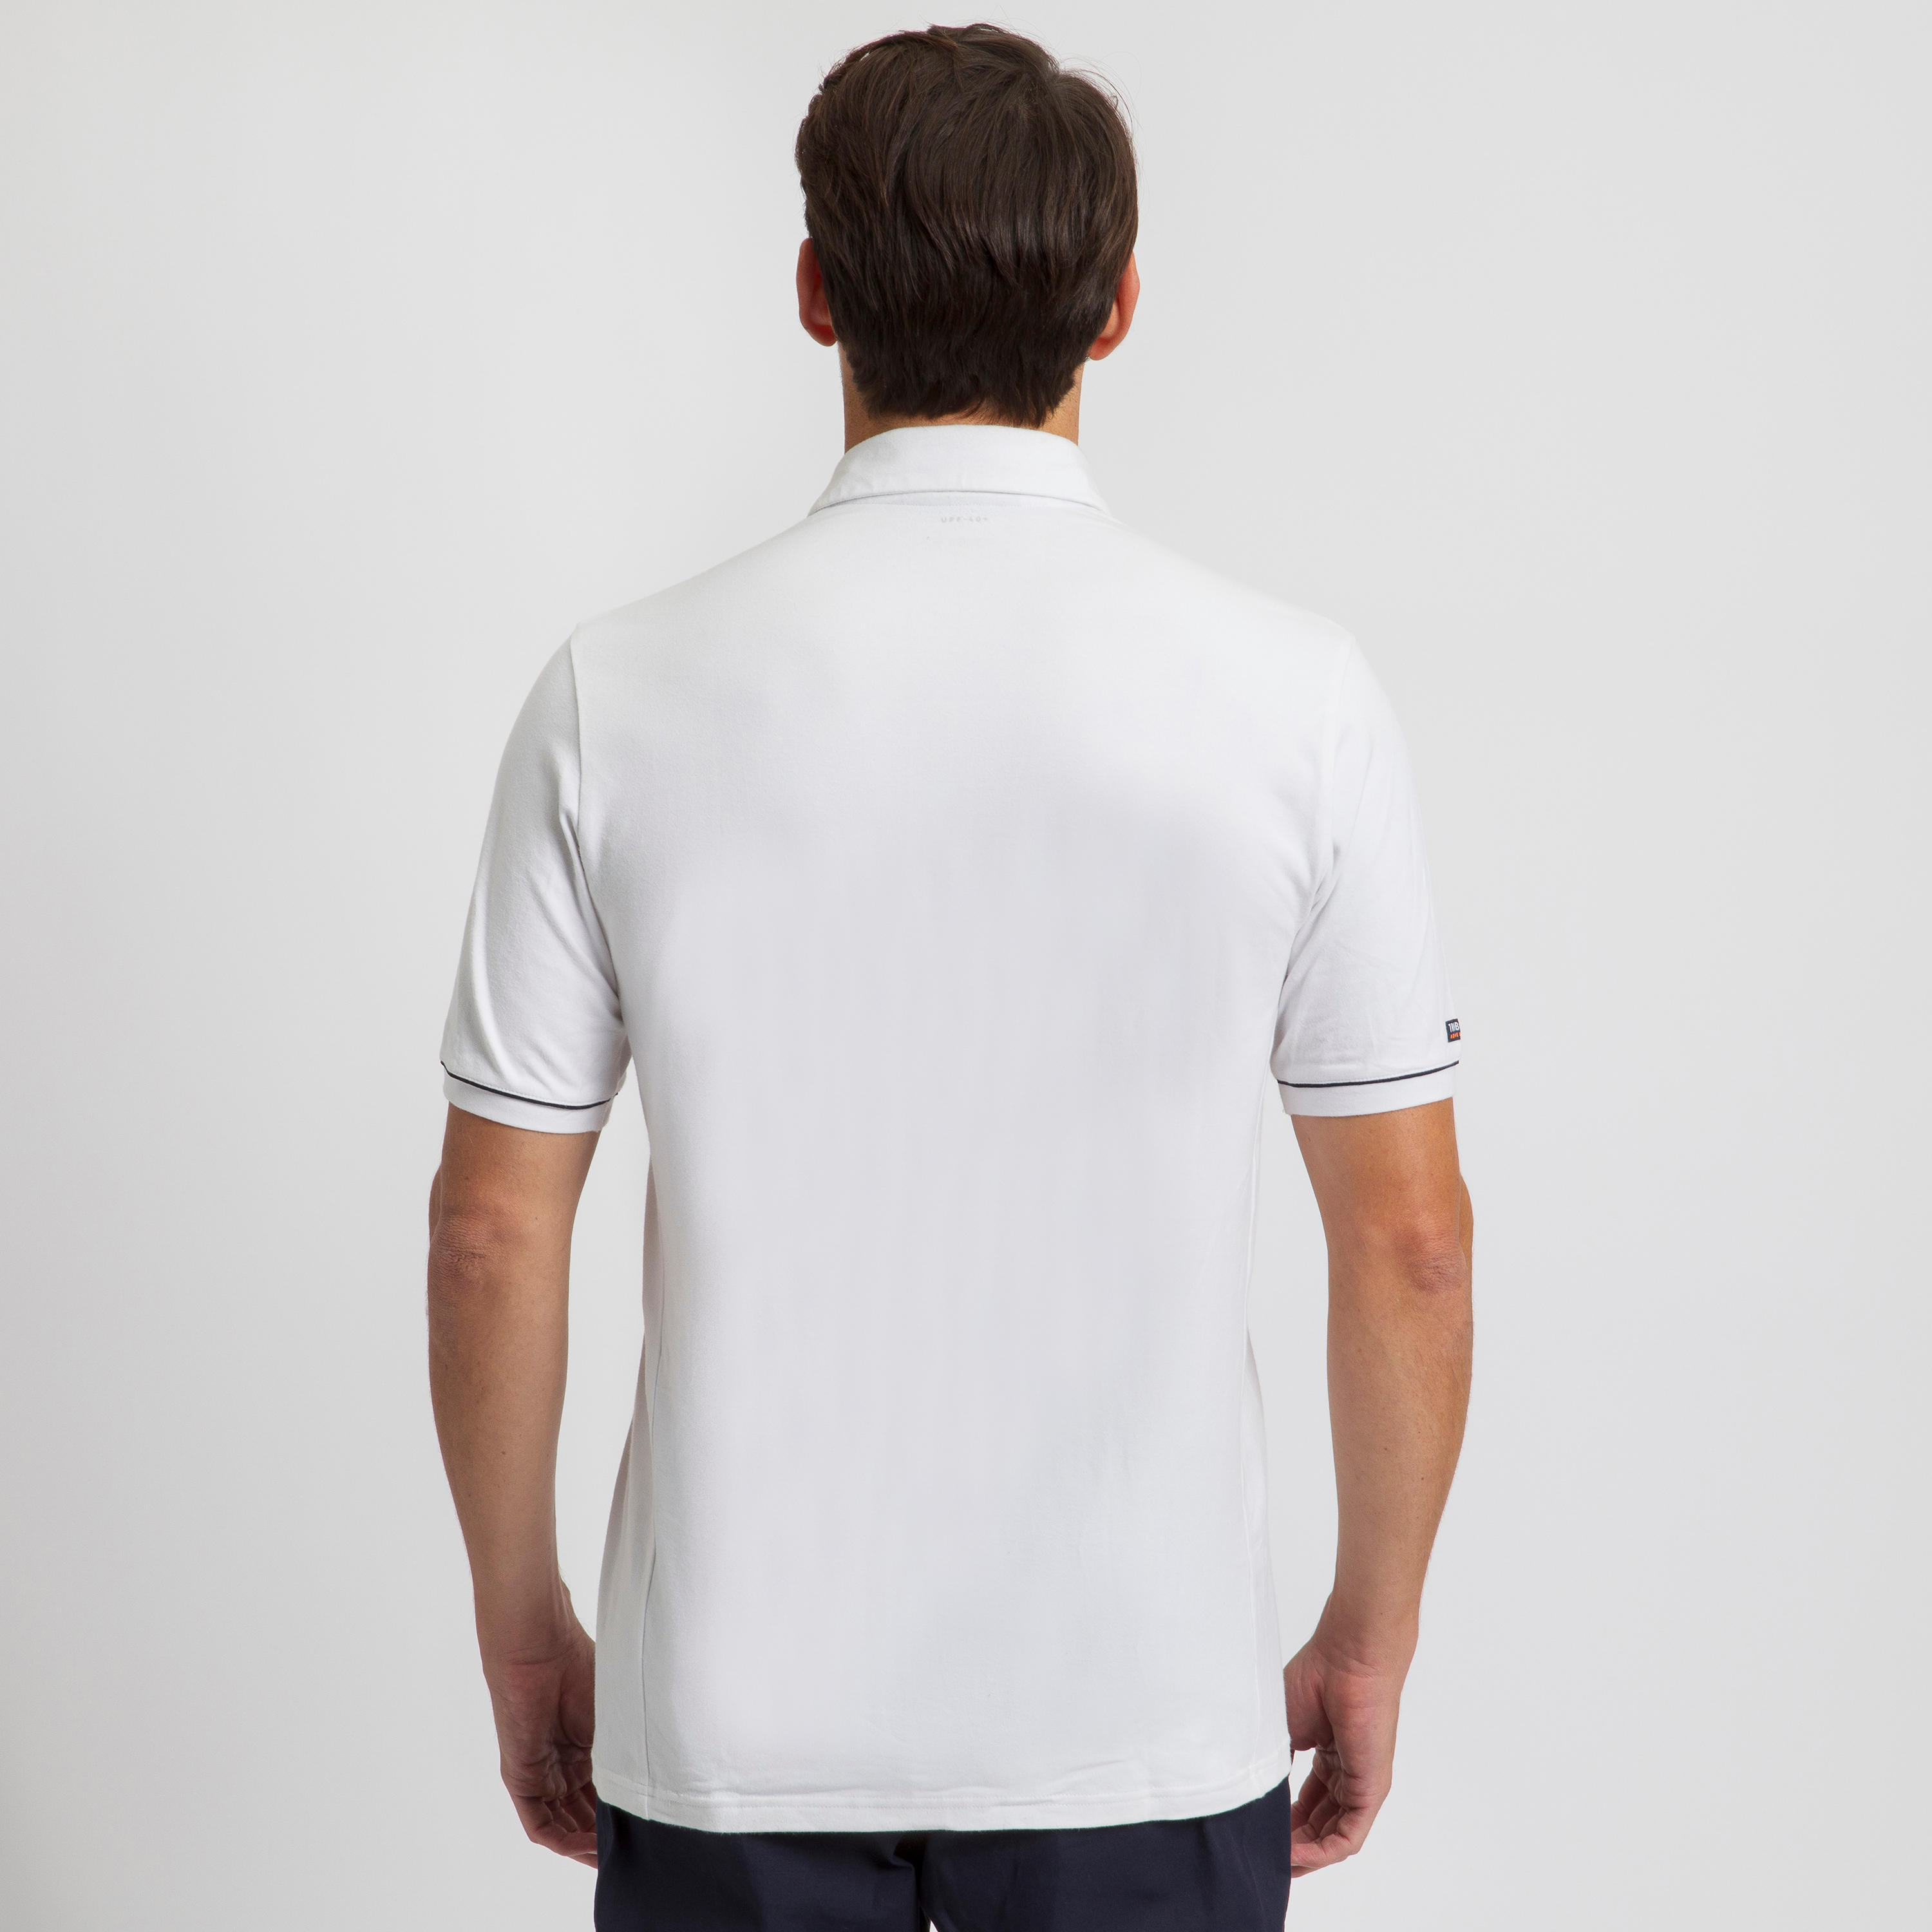 Sailing 100 Men's Sailing Short Sleeve Polo Shirt - White 4/7